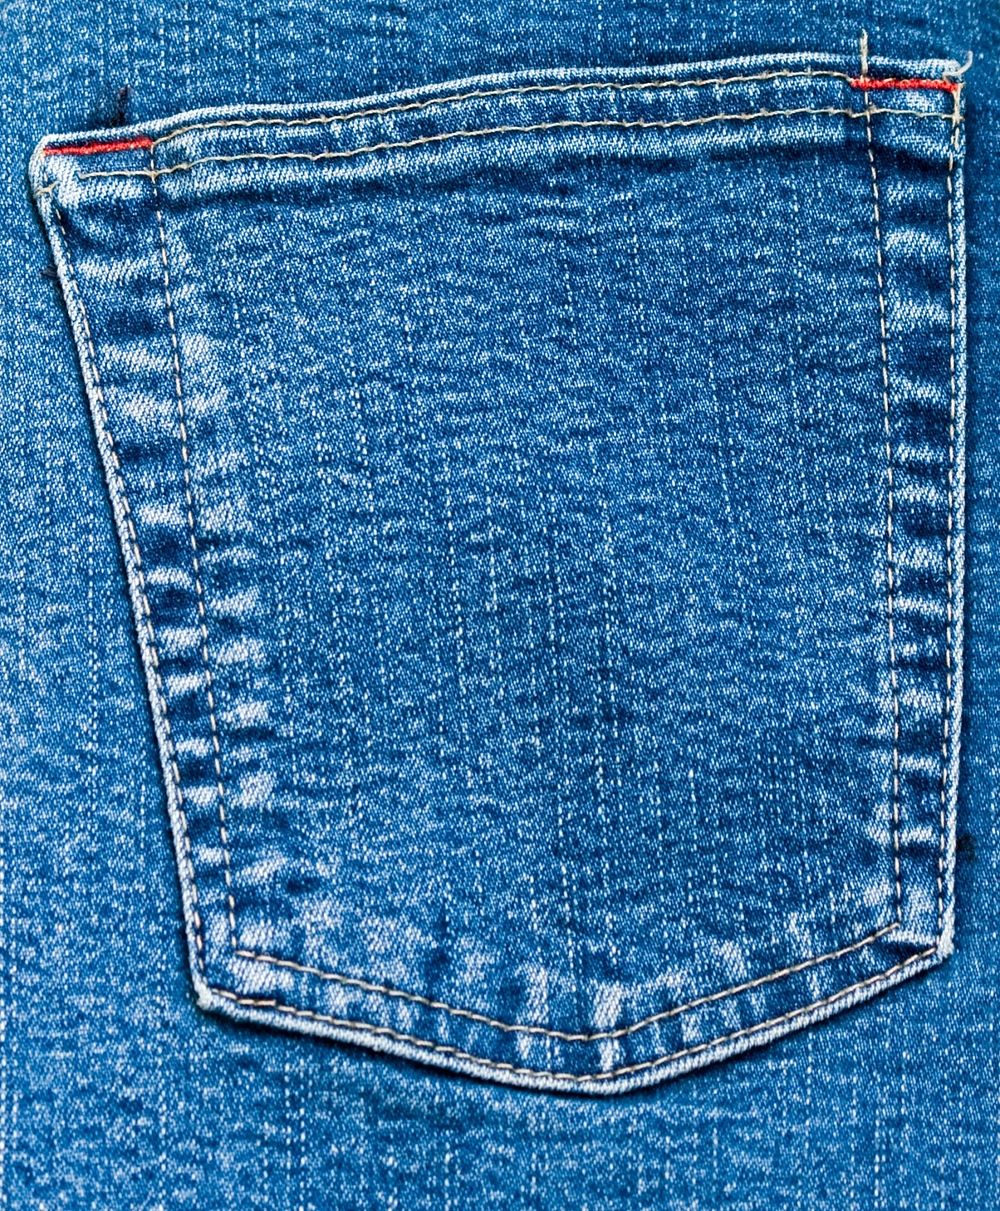 Free jeans pocket image, public domain fashion CC0 photo.